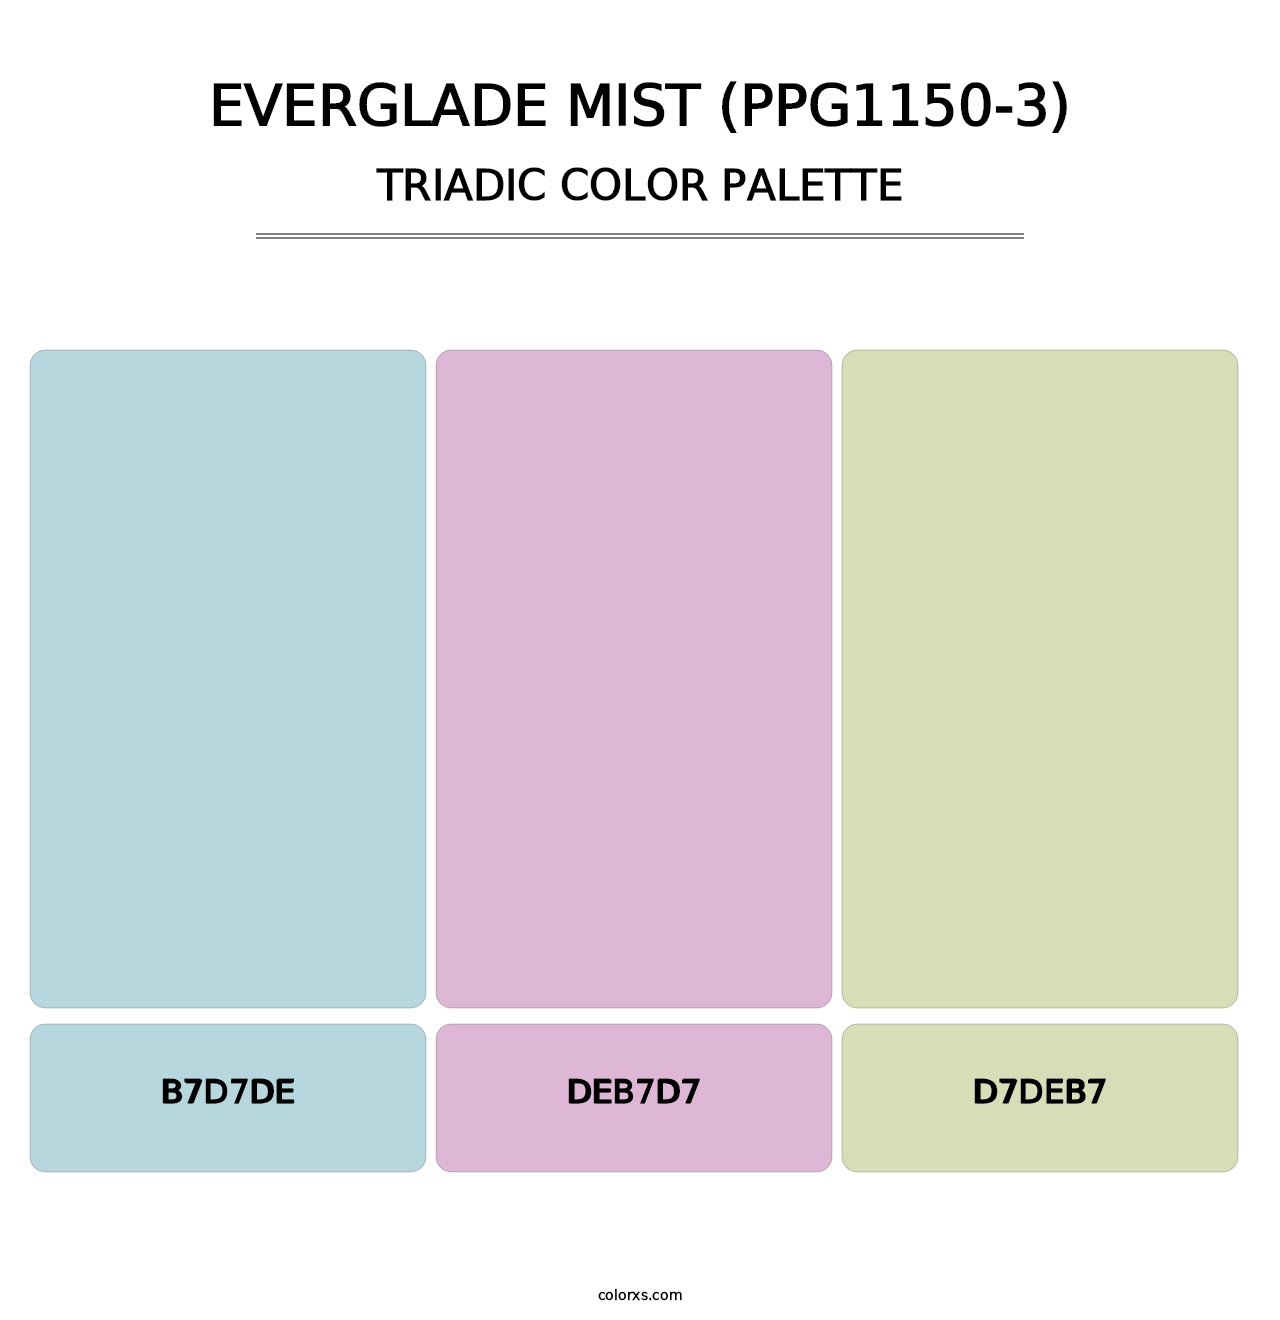 Everglade Mist (PPG1150-3) - Triadic Color Palette